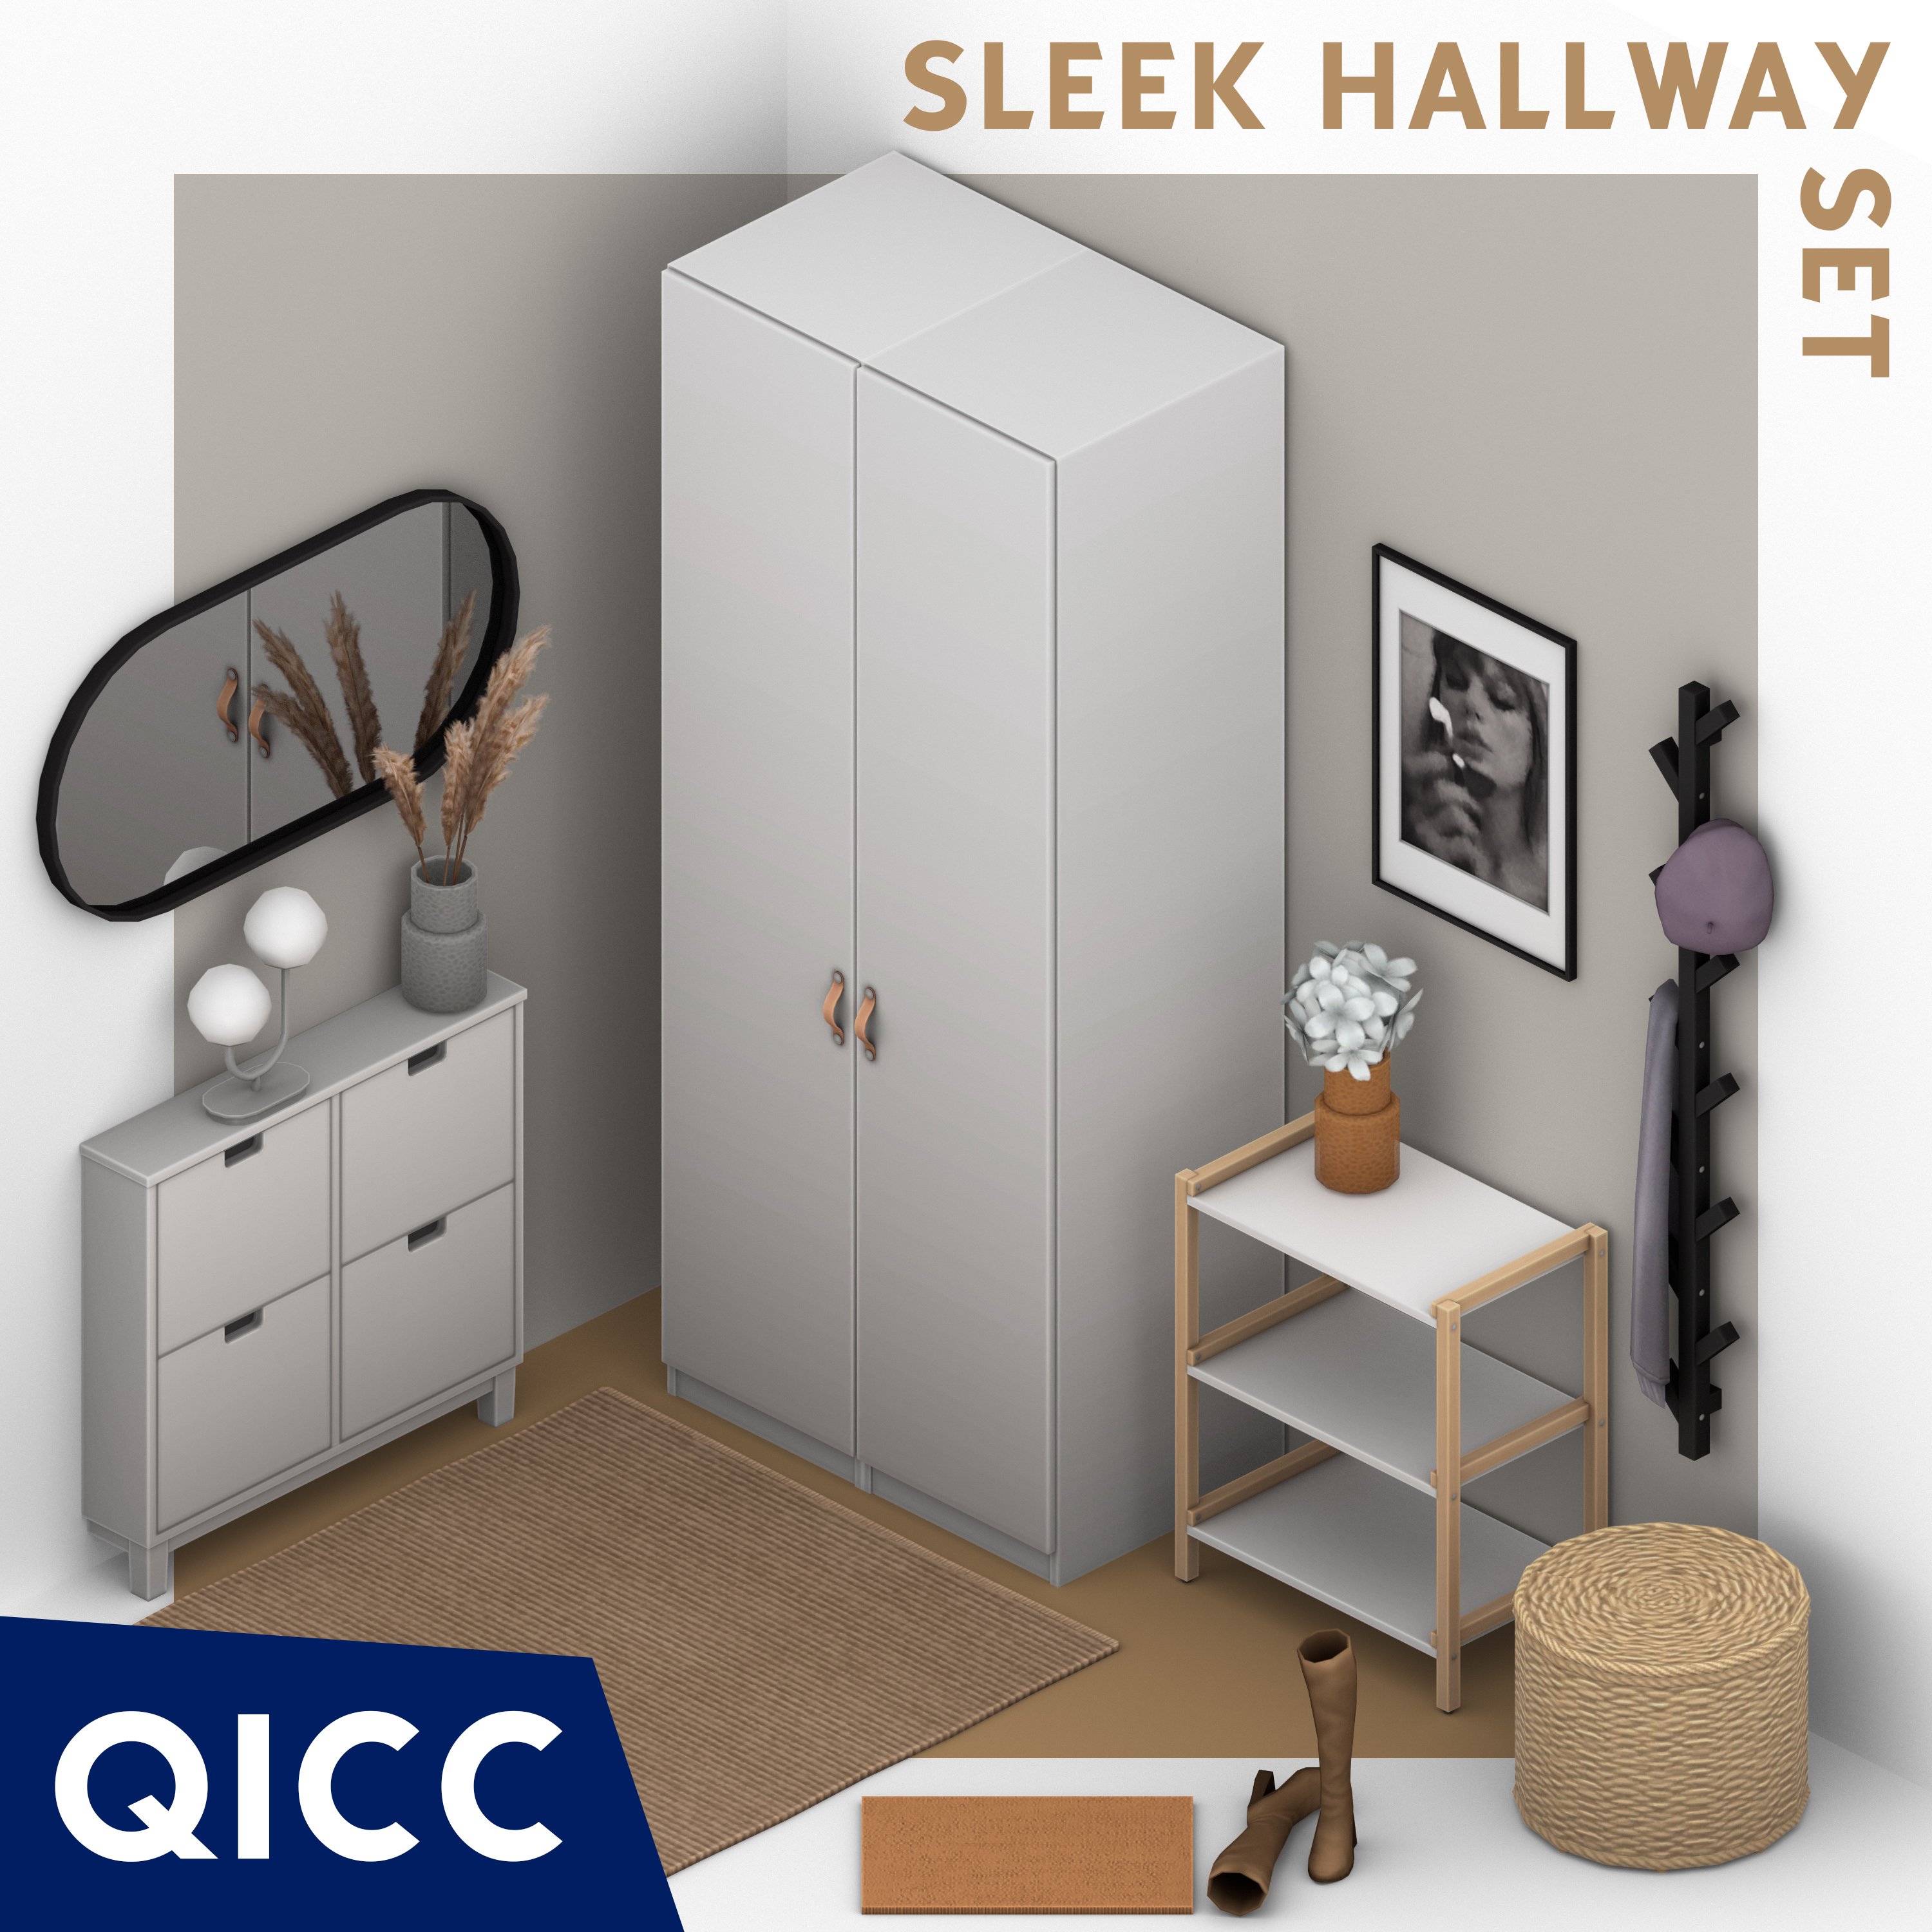 QICC - Sleek Hallway Set project avatar